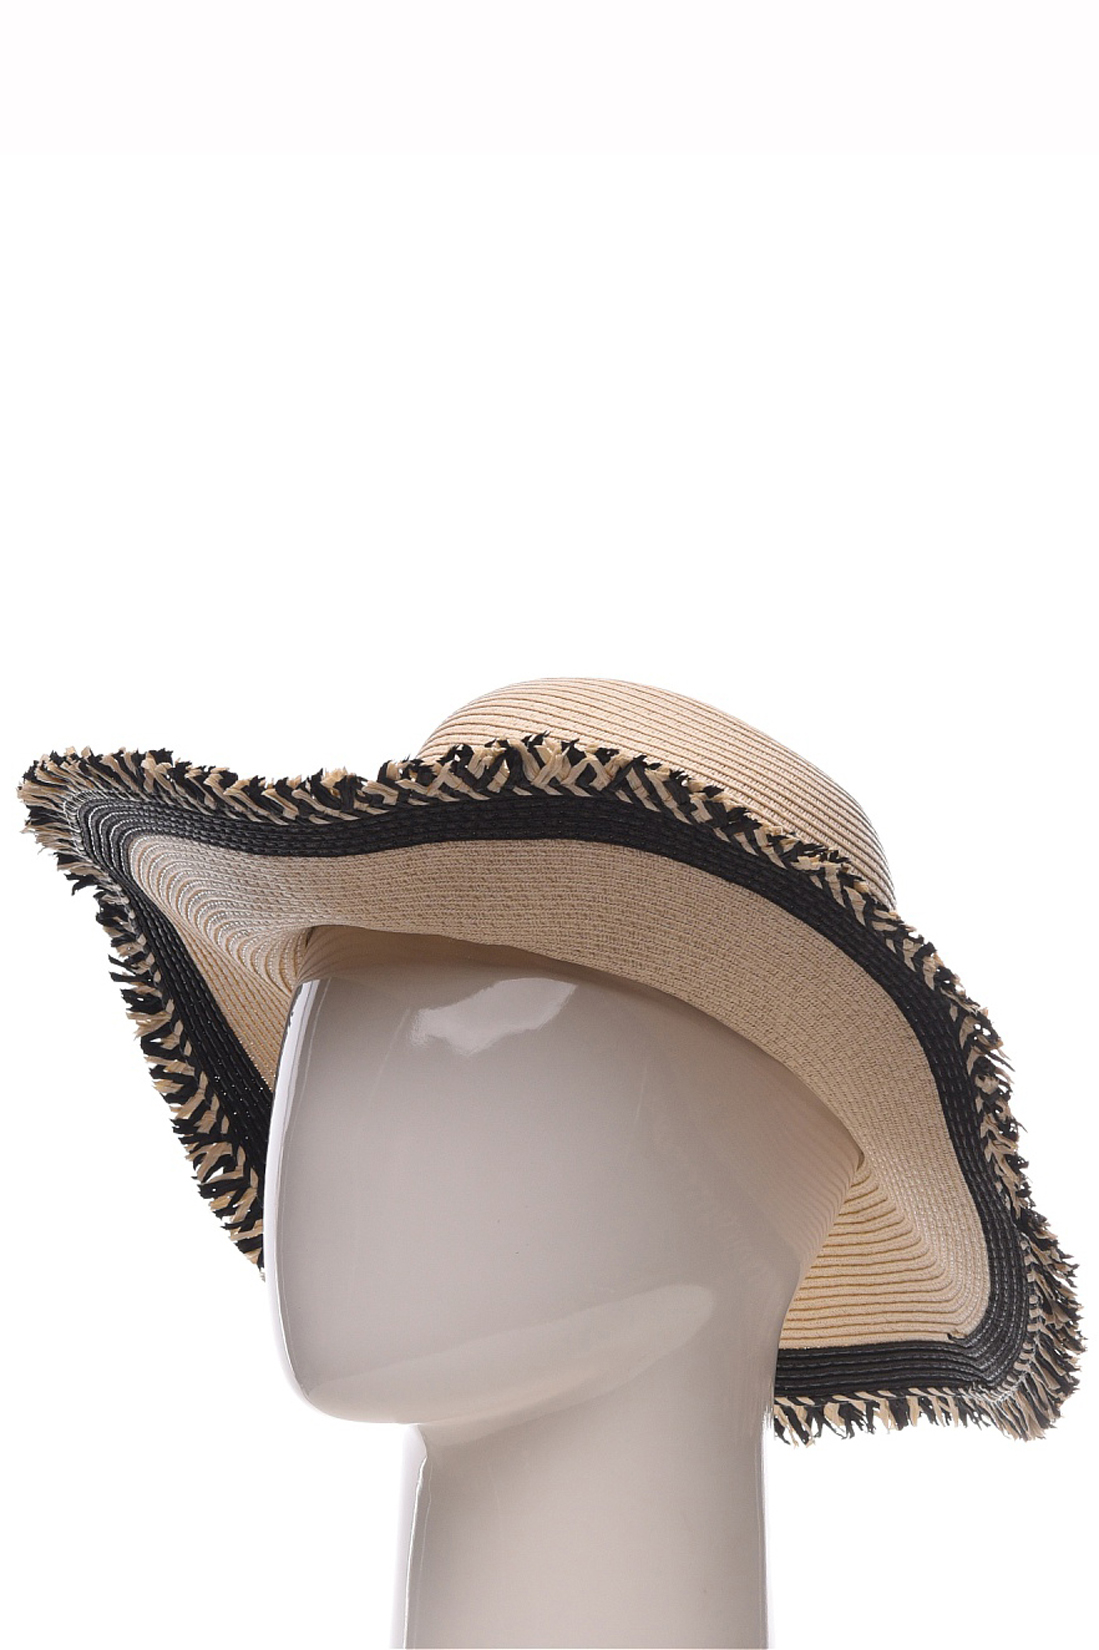 Шляпа с бахромой (арт. baon B349003), размер Б/р 56, цвет бежевый